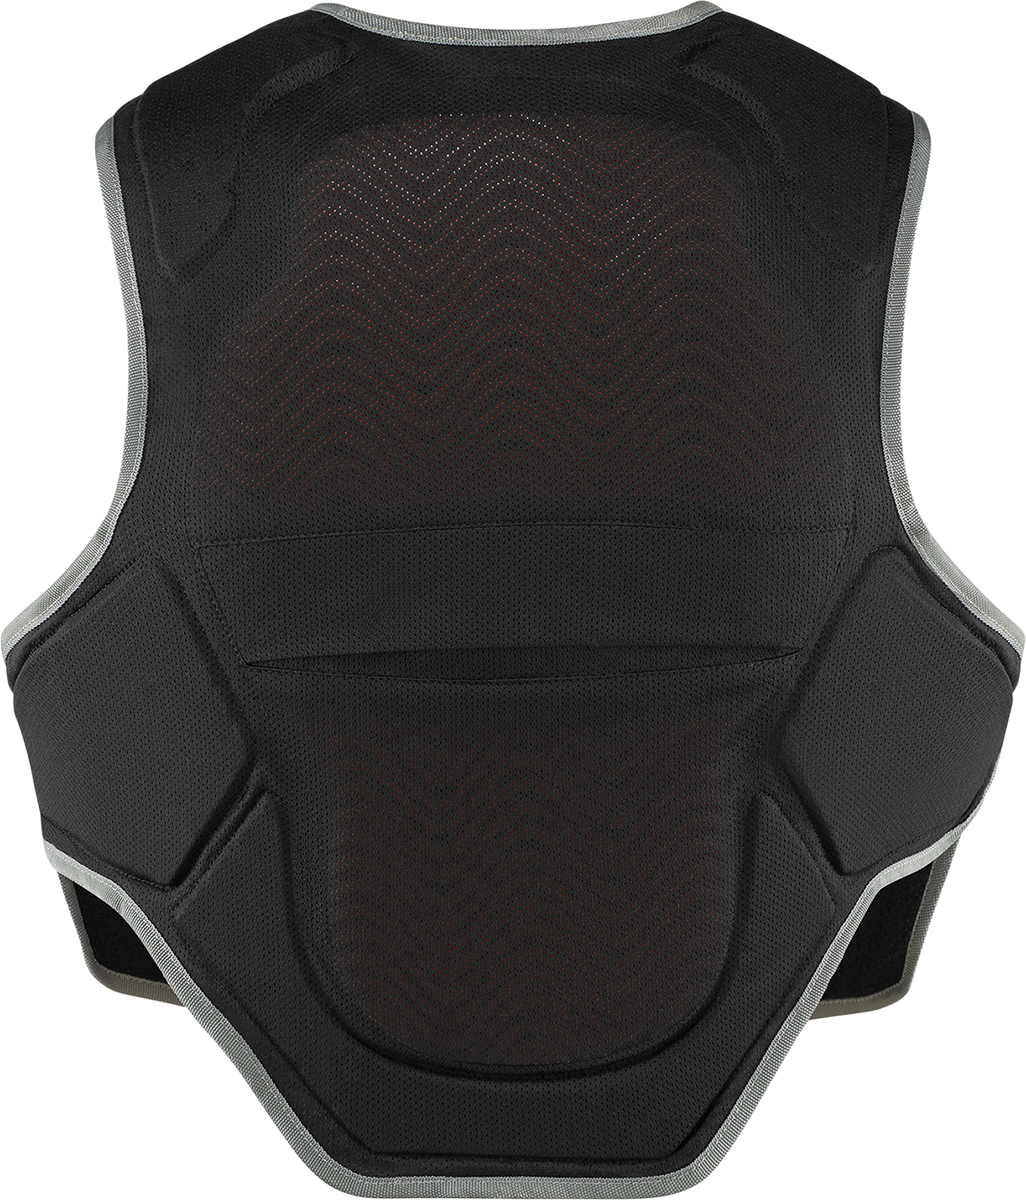 Softcore™ Vest - Megabolt Black - Medium/Large